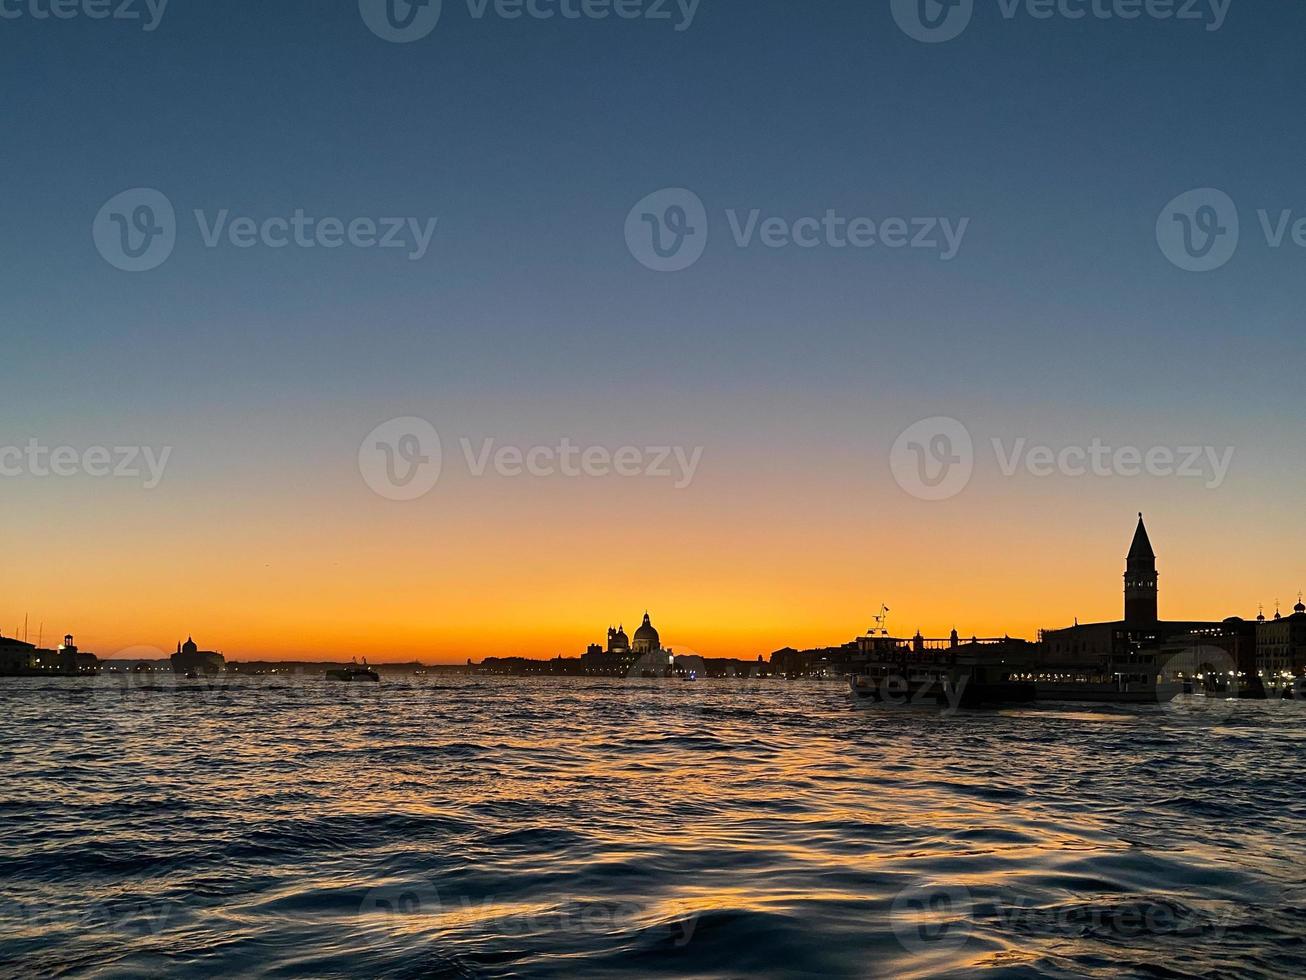 water surface of Venetian lagoon at sunset photo